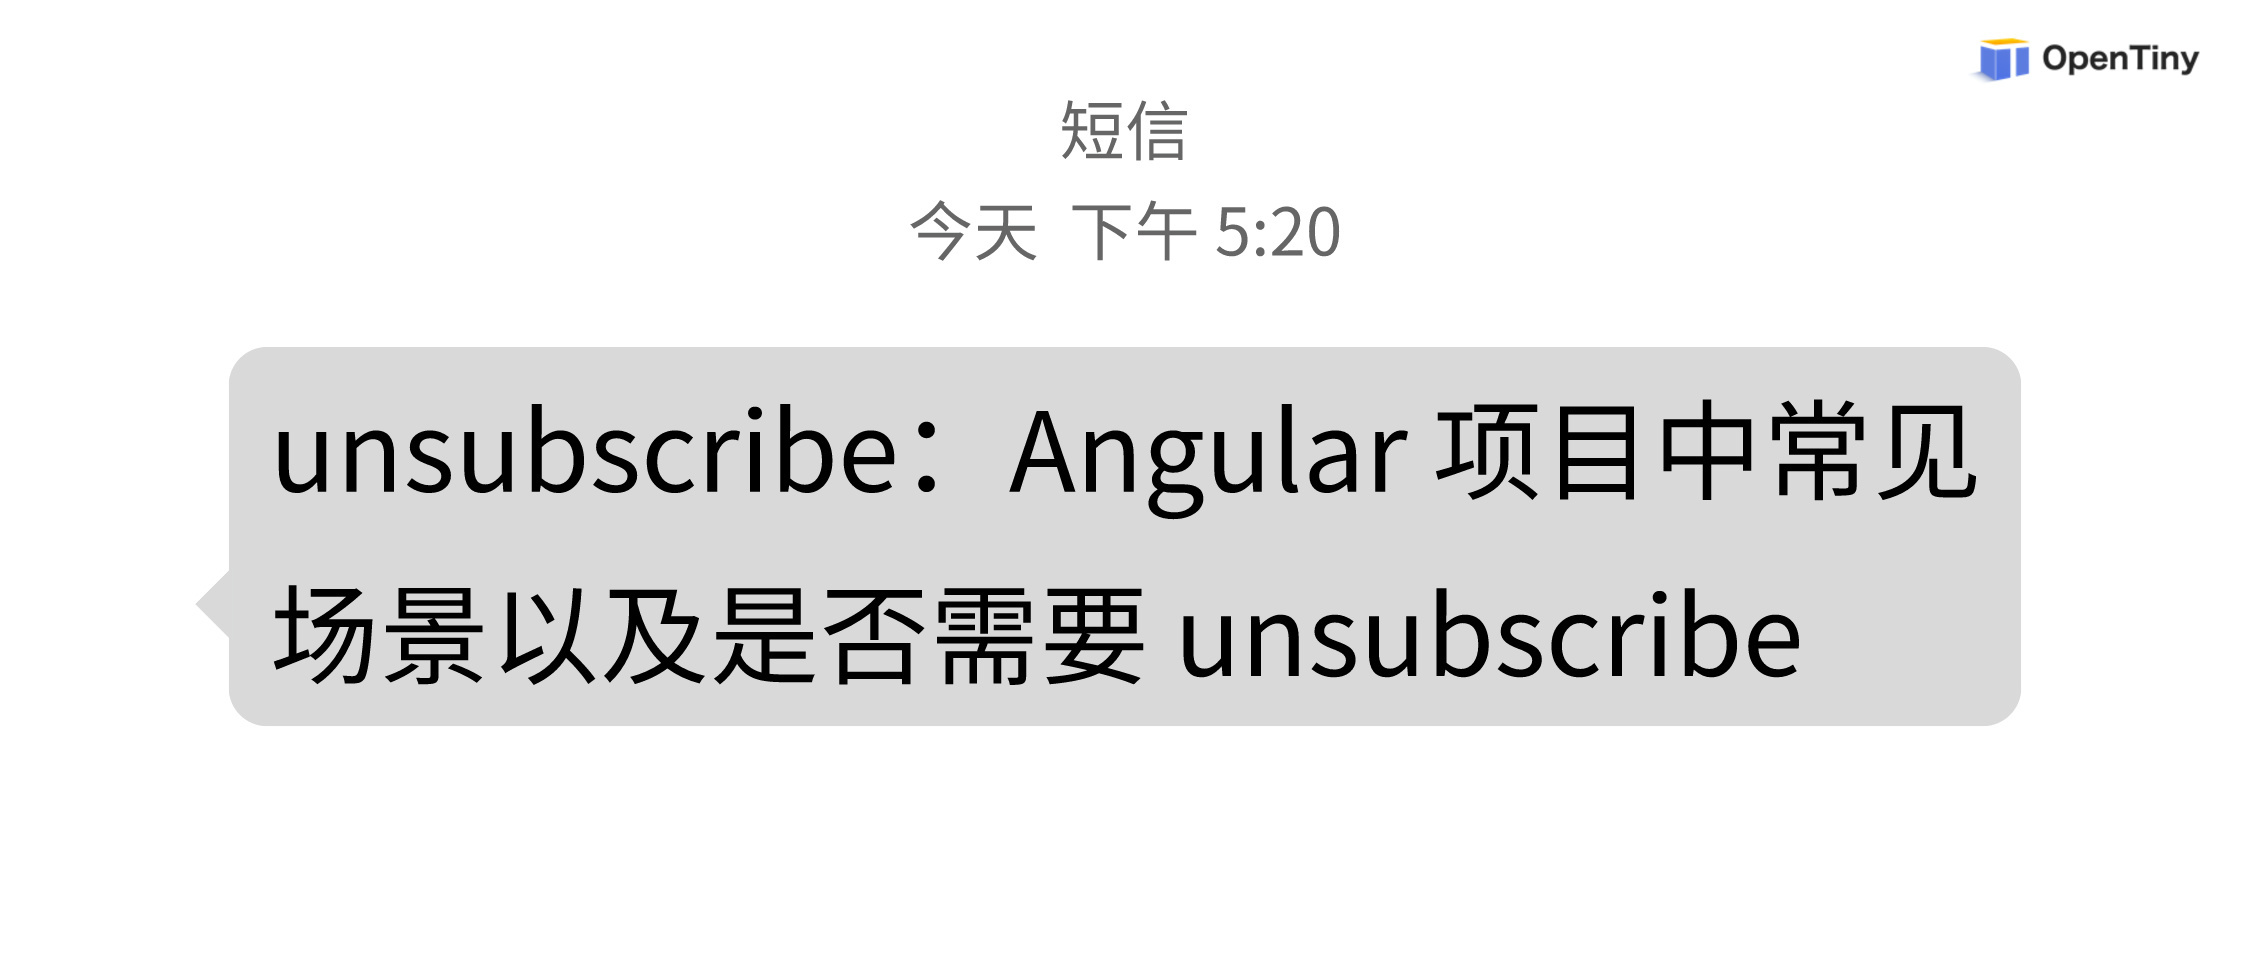 unsubscribe：Angular 项目中常见场景以及是否需要 unsubscribe